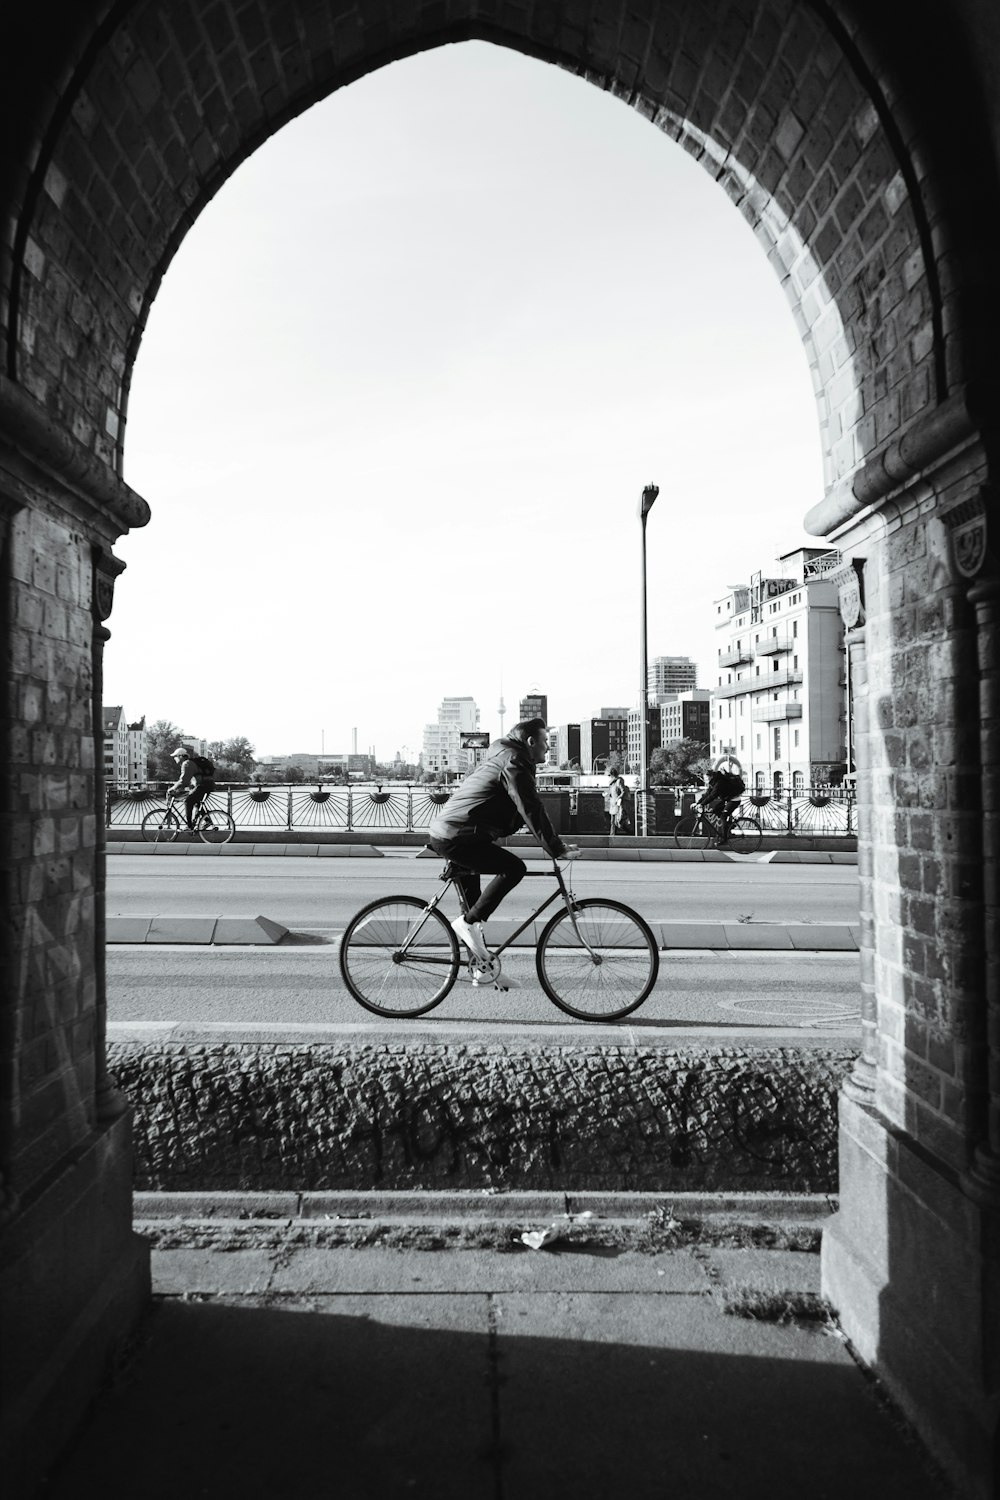 a man riding a bike through an archway